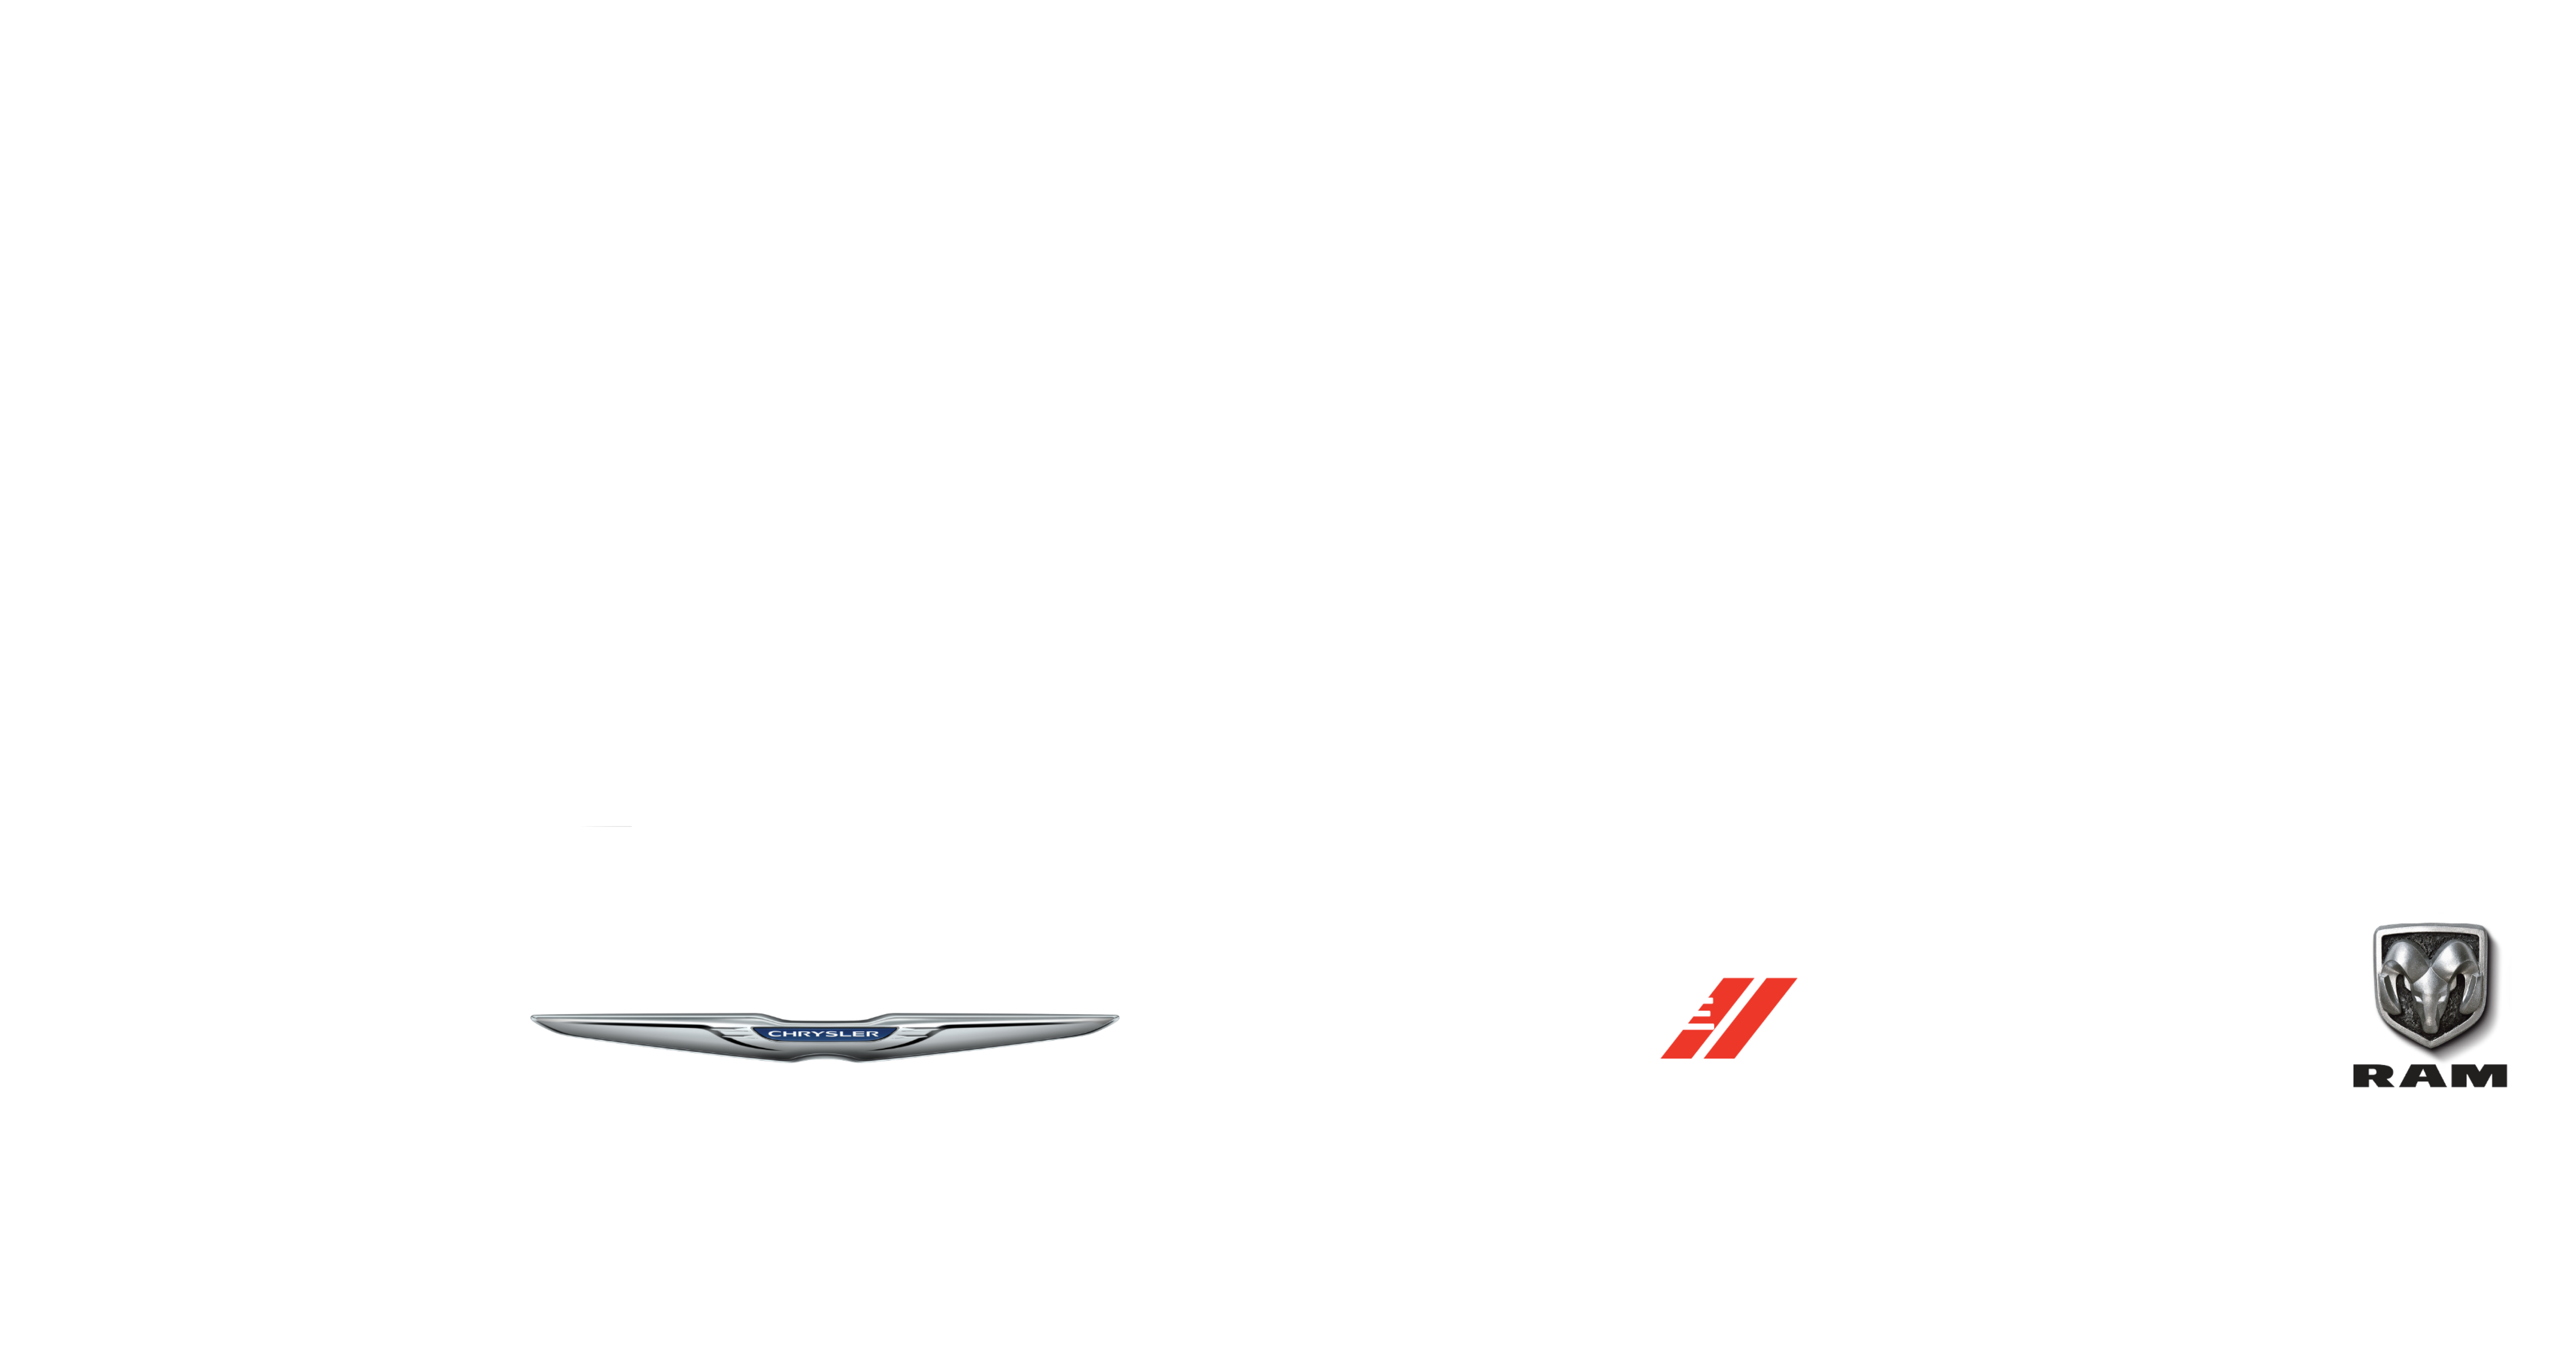 Patriot CDJR of Chandler-logo